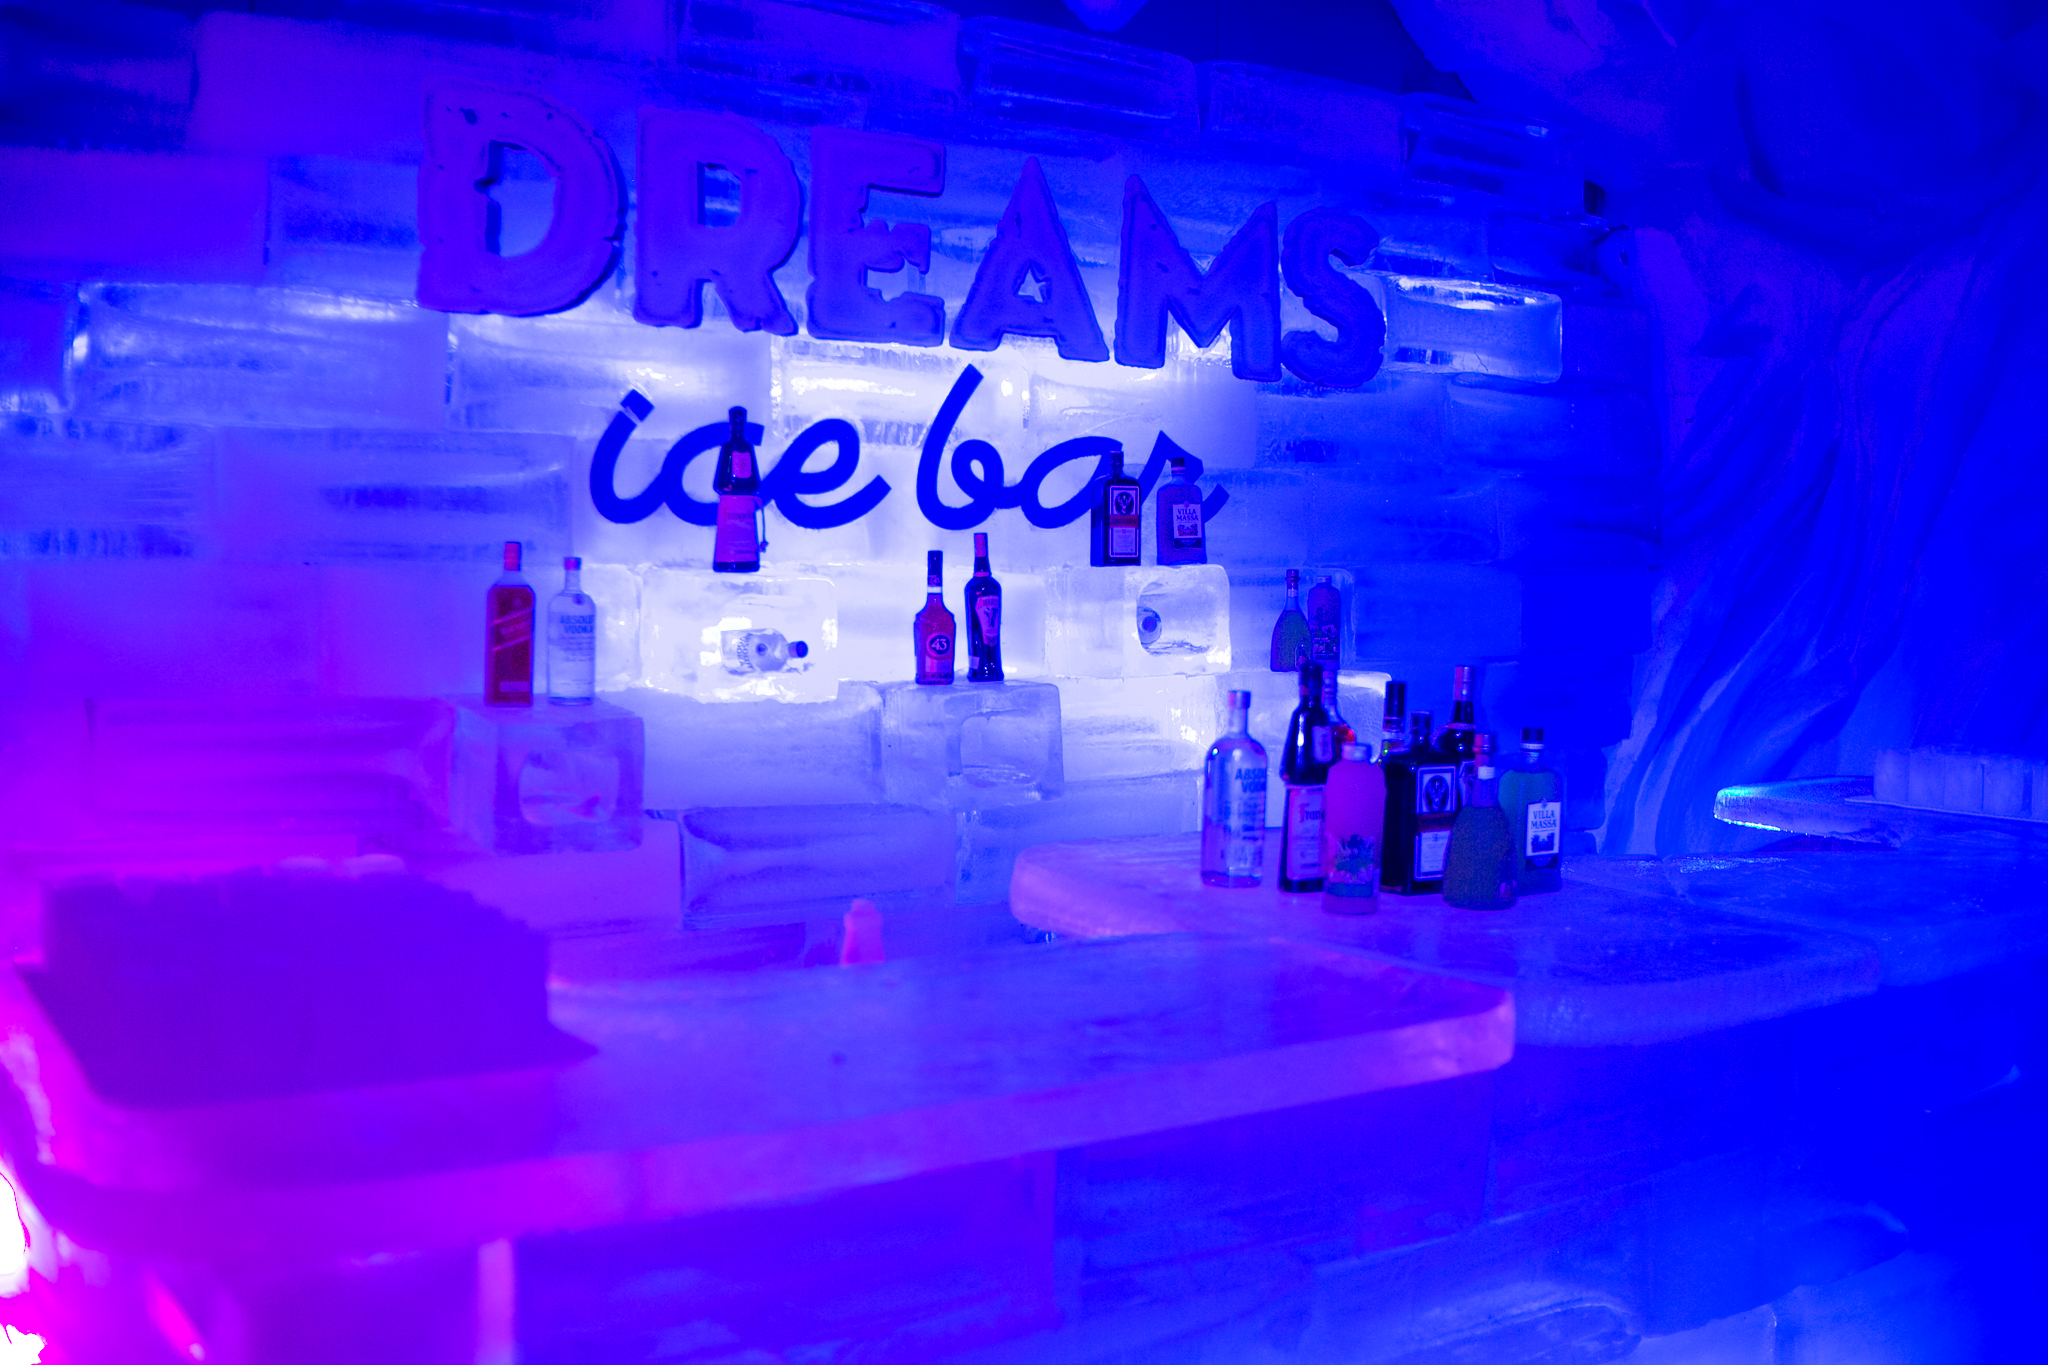 Dreams Ice Bar 